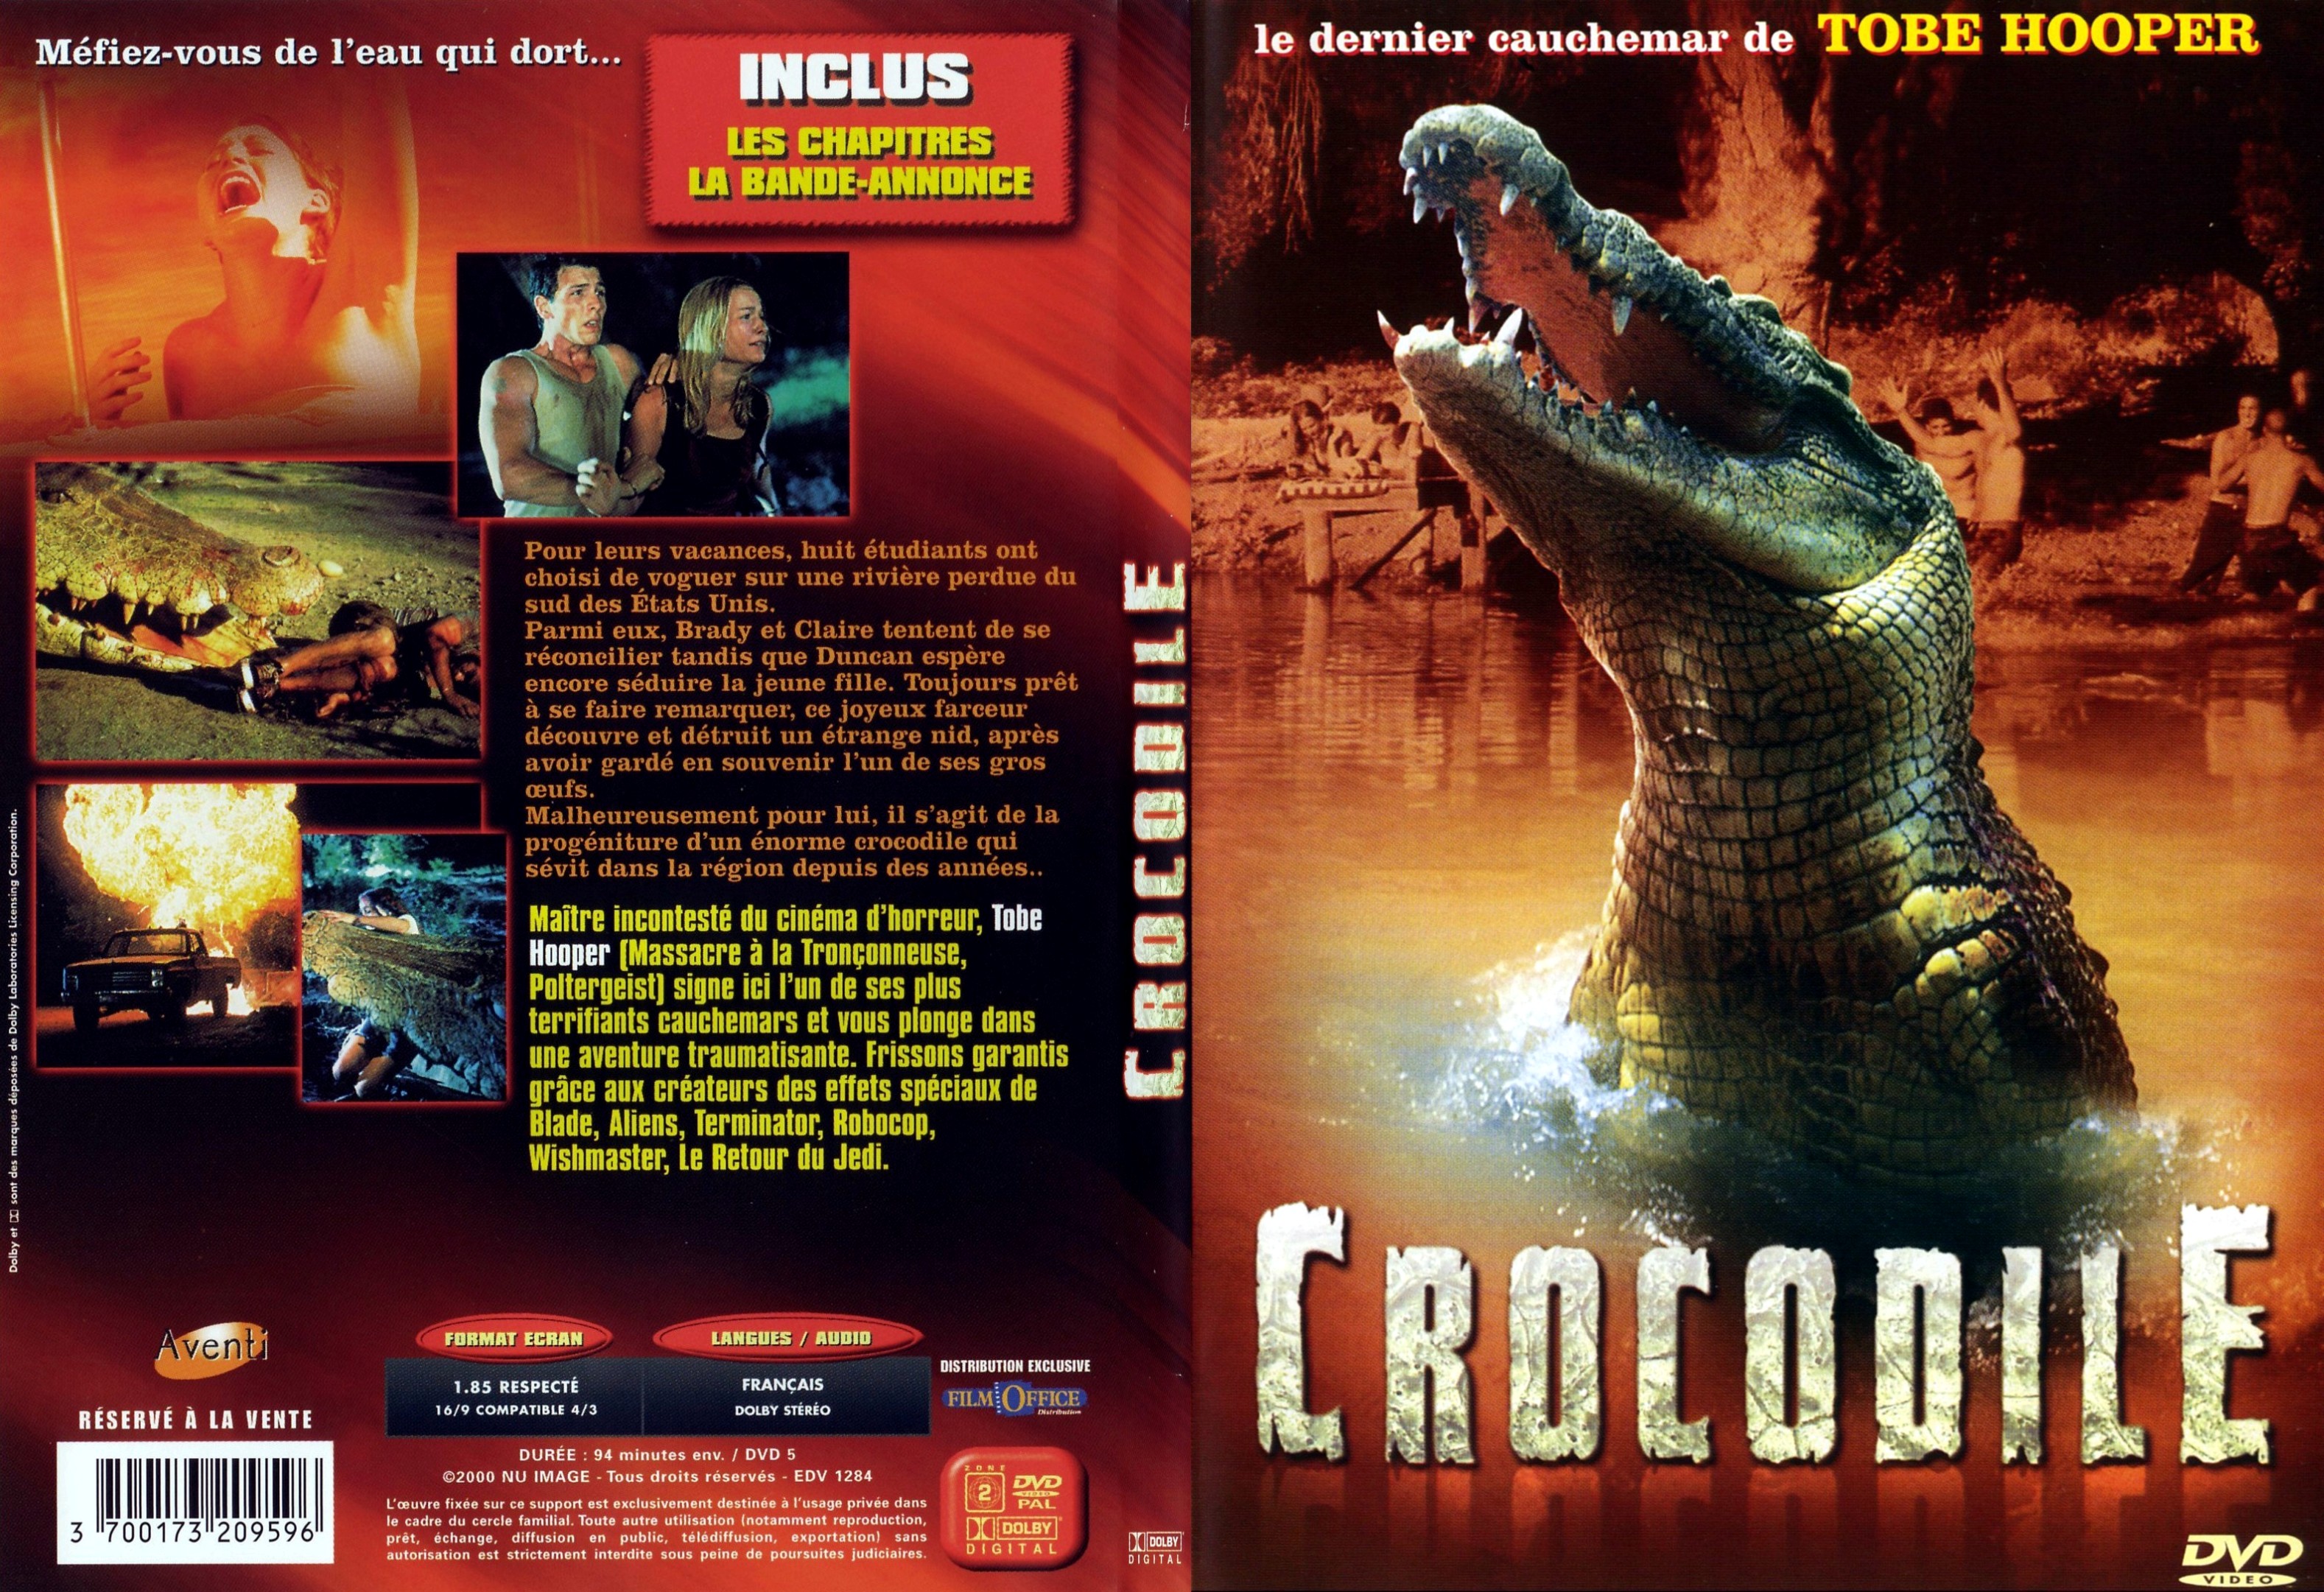 Jaquette DVD Crocodile - SLIM v2